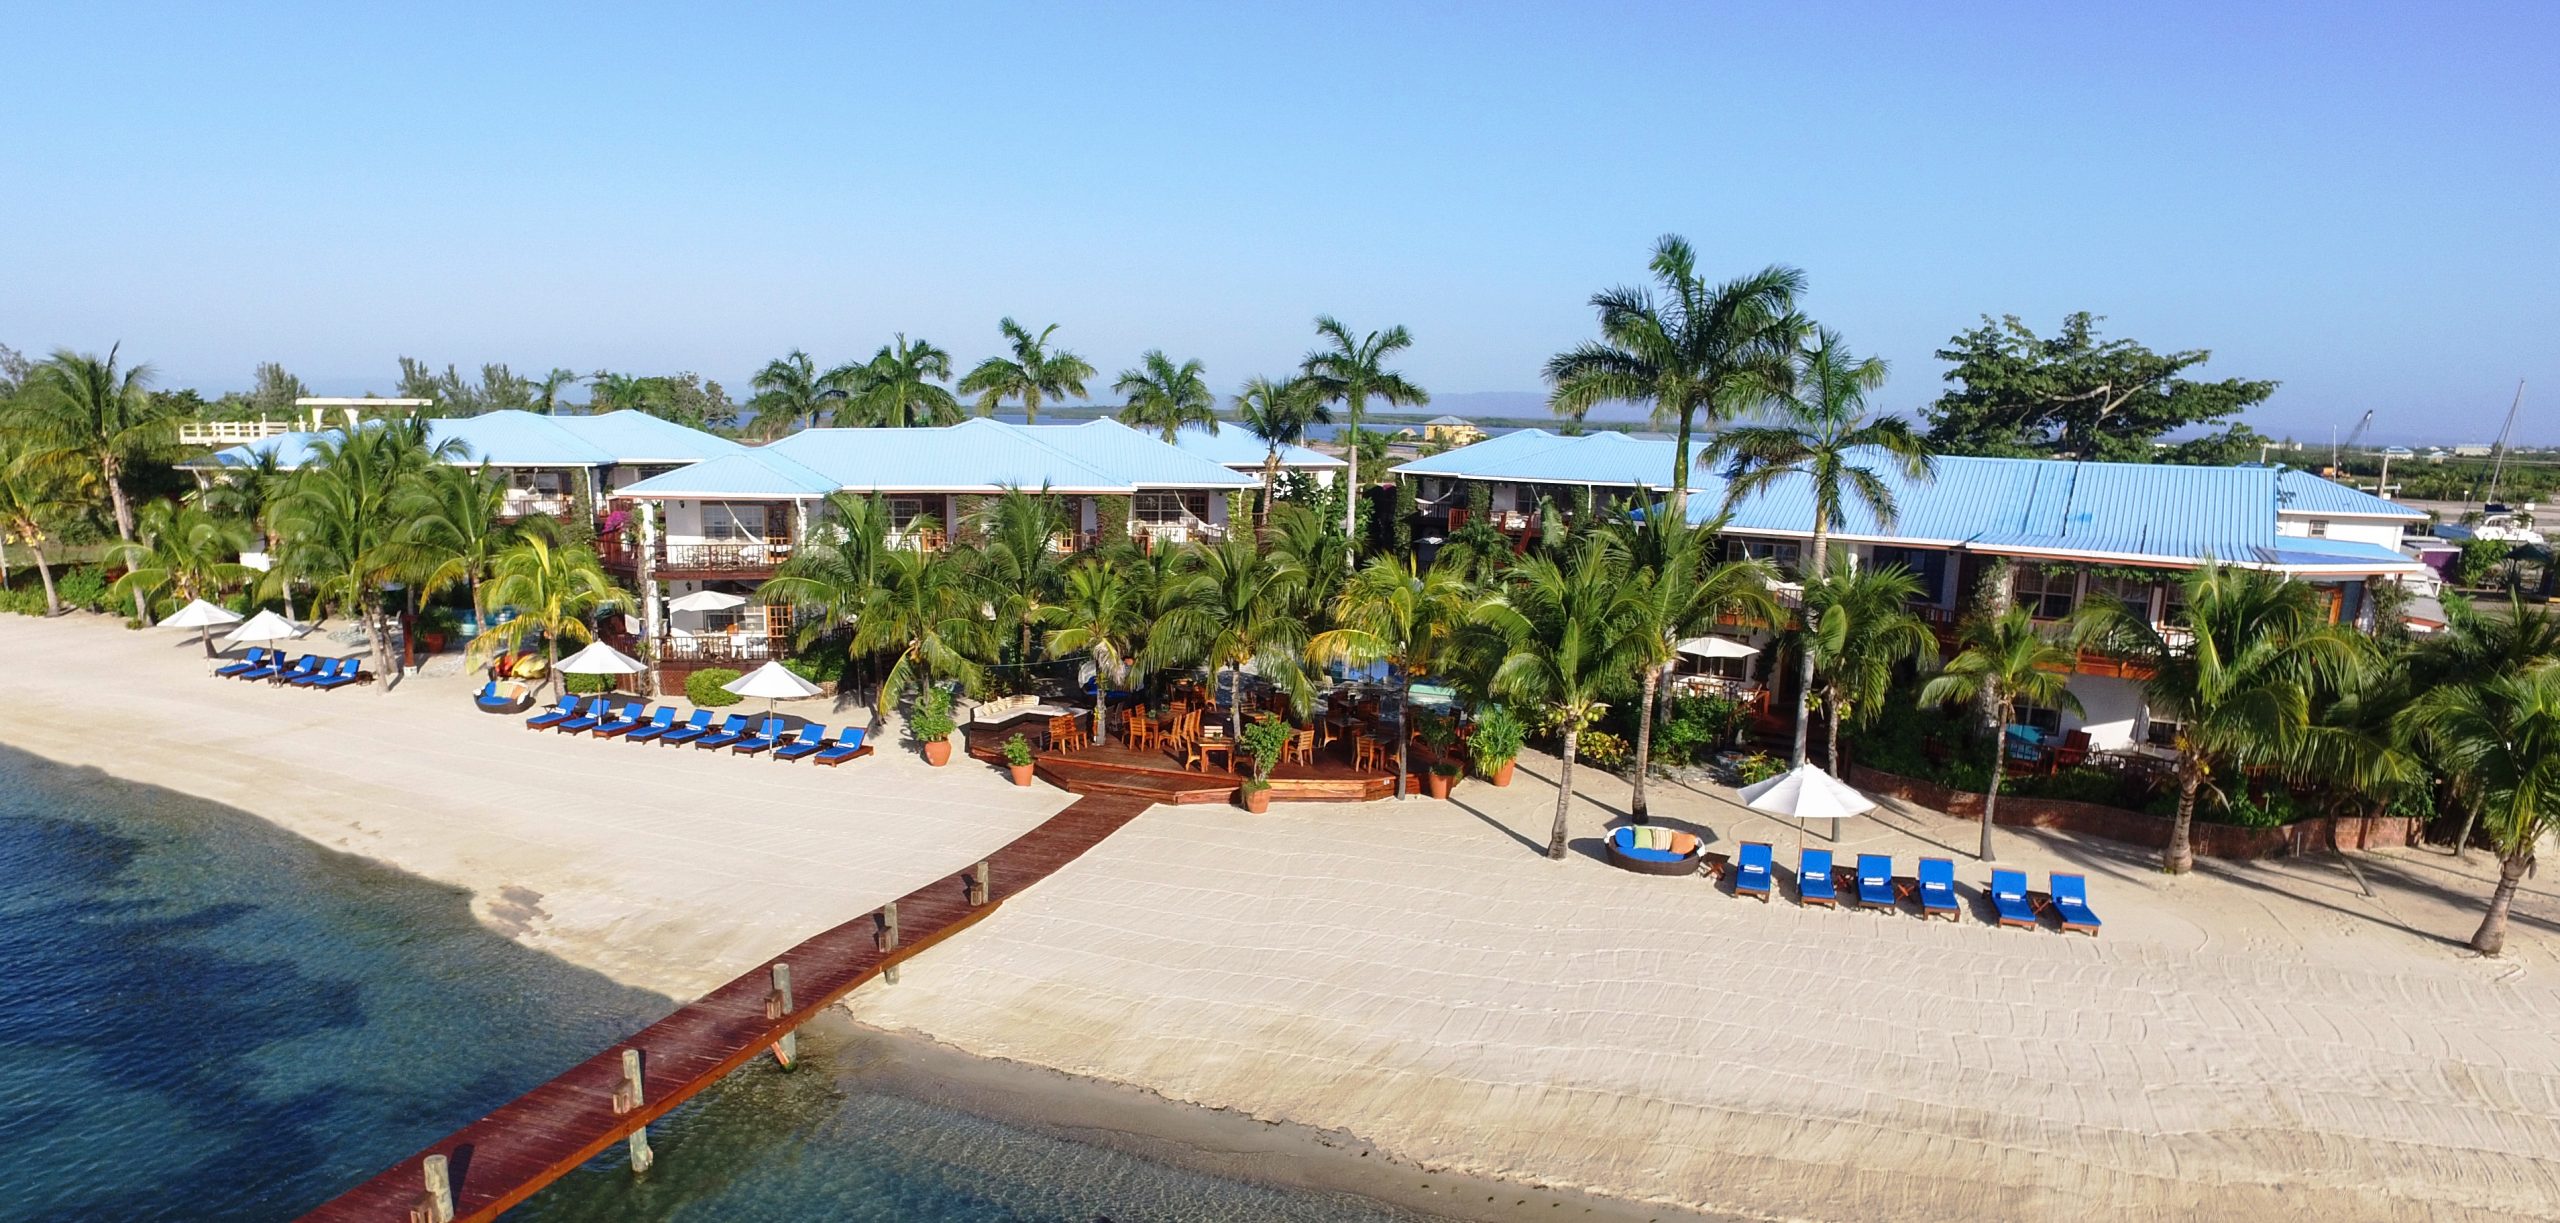 Authentic Beach Resort in Placencia Belize